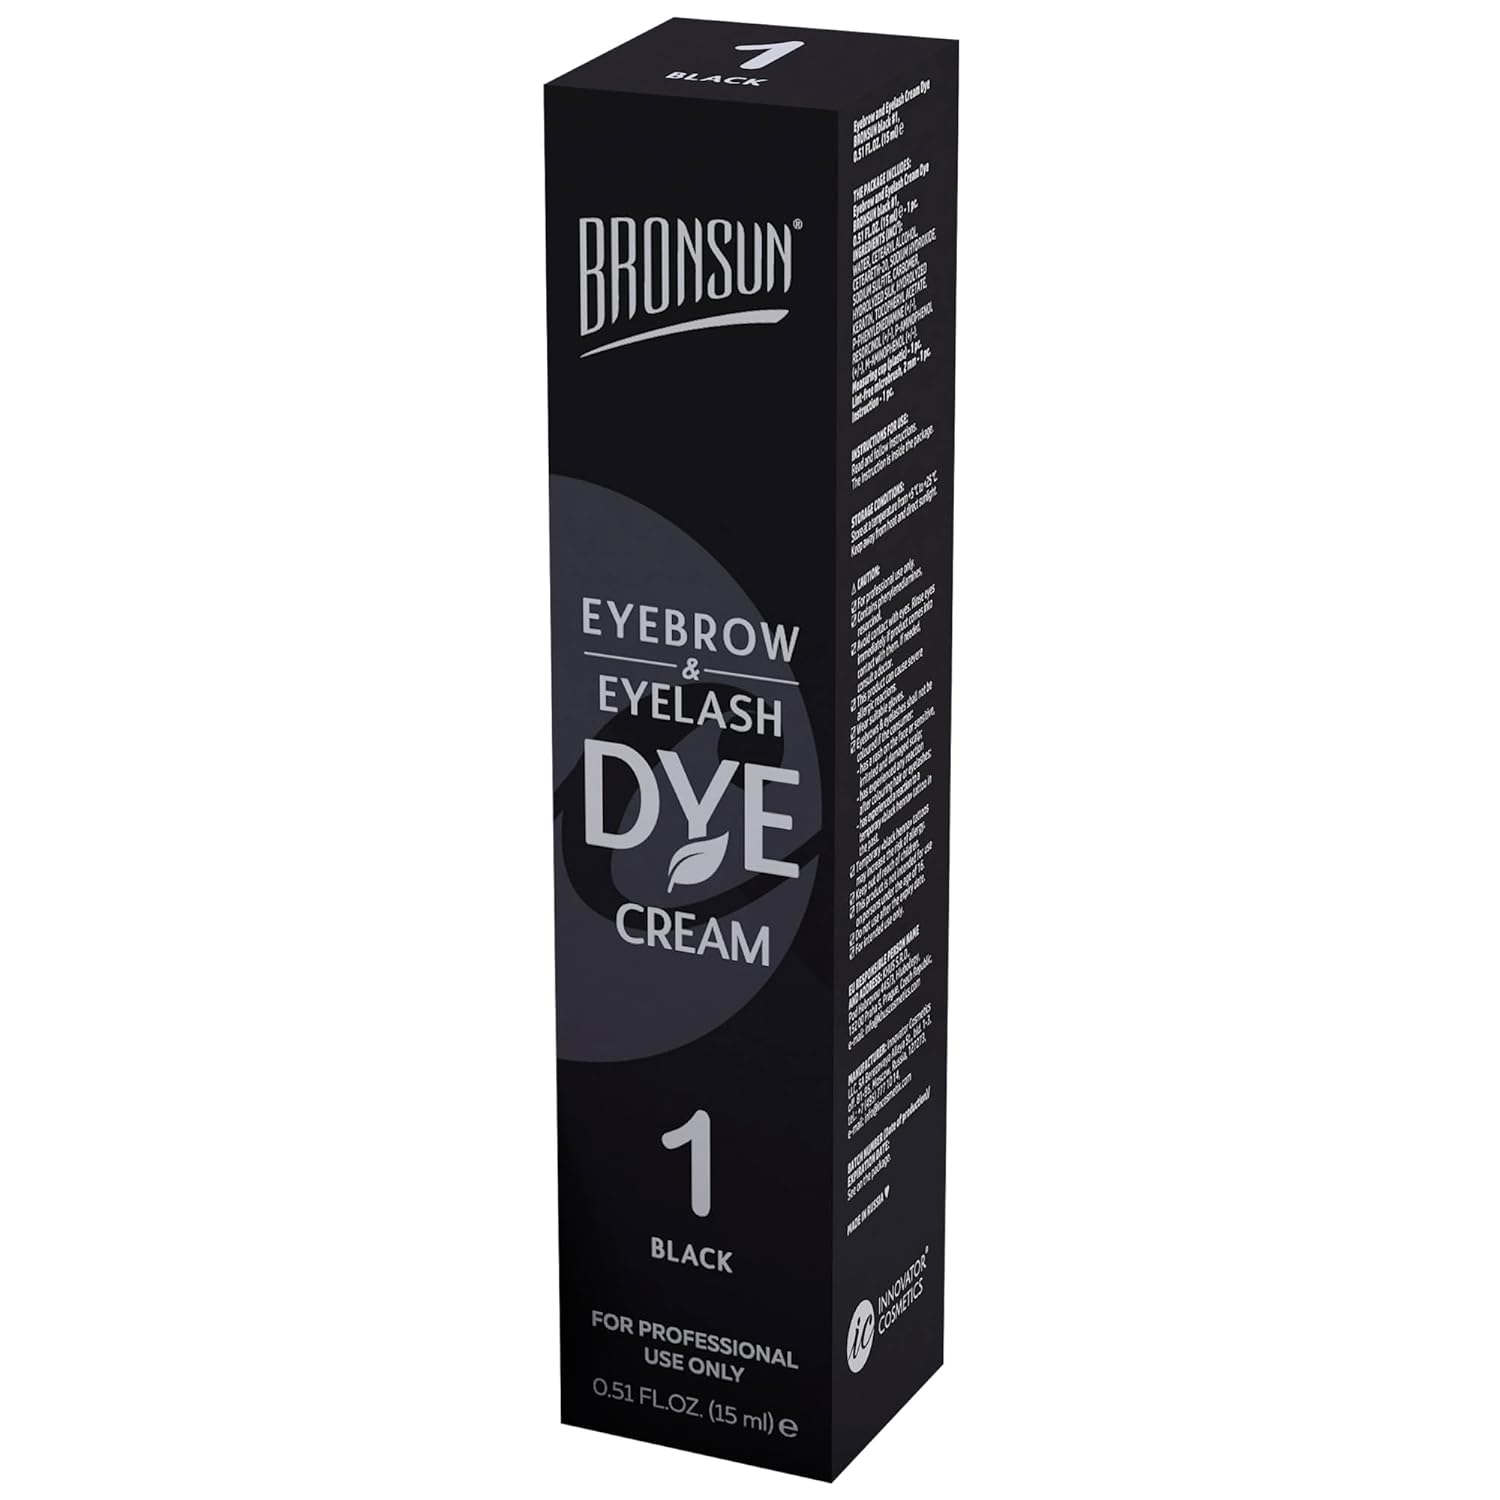 Bronsun Eyebrow & Eyelash Dye Cream Black Eyelash Color